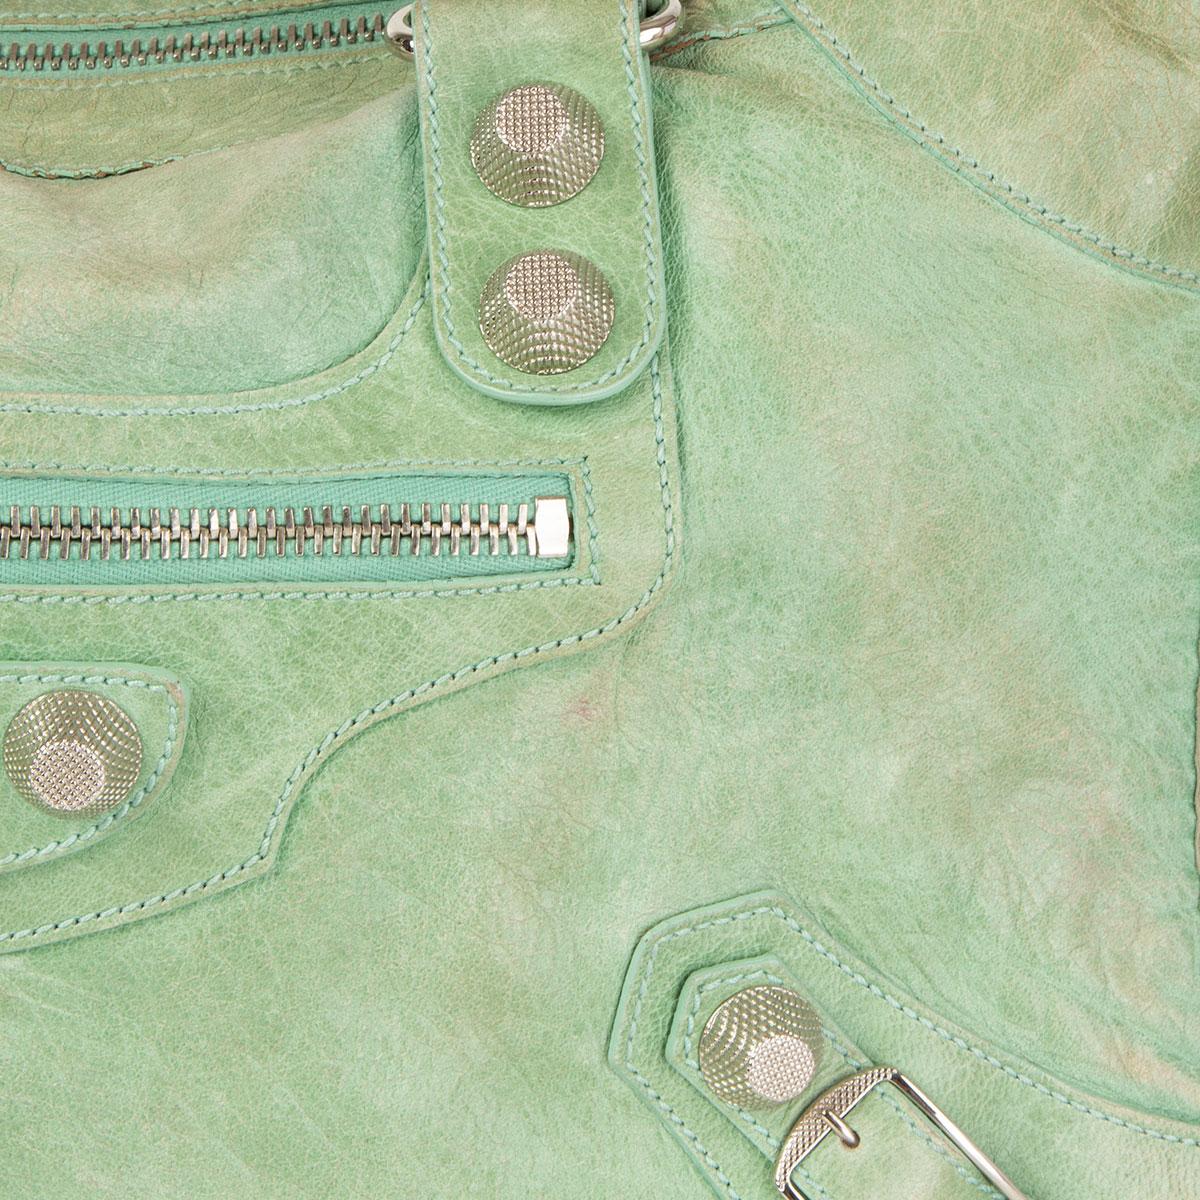 Women's BALENCIAGA mint green distressed leather GIANT WORK Satchel Bag